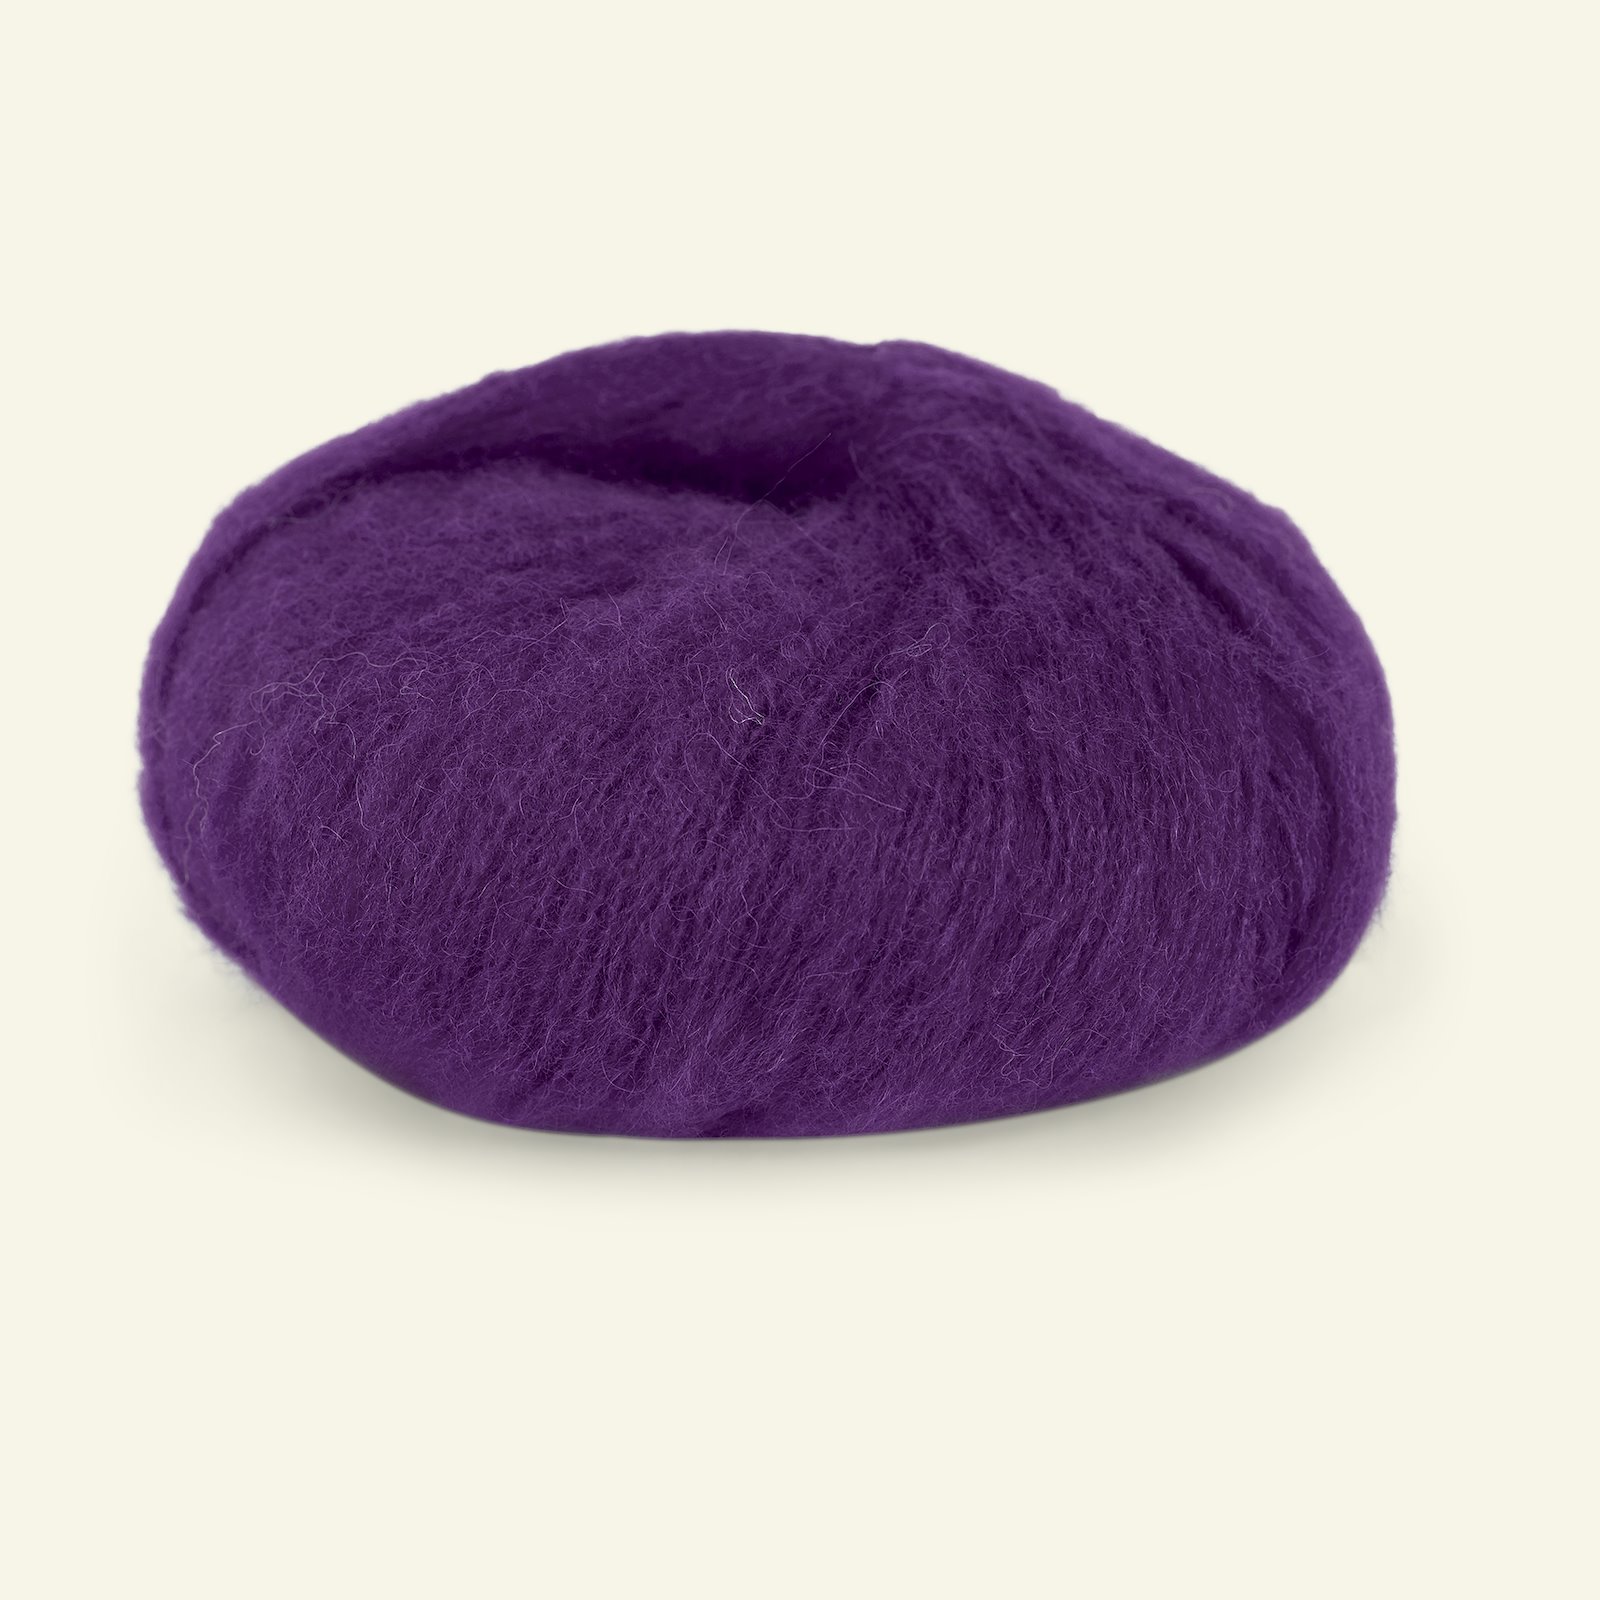 Du Store Alpakka, airy alpaca yarn "Faerytale", purple (804) 90000611_pack_b